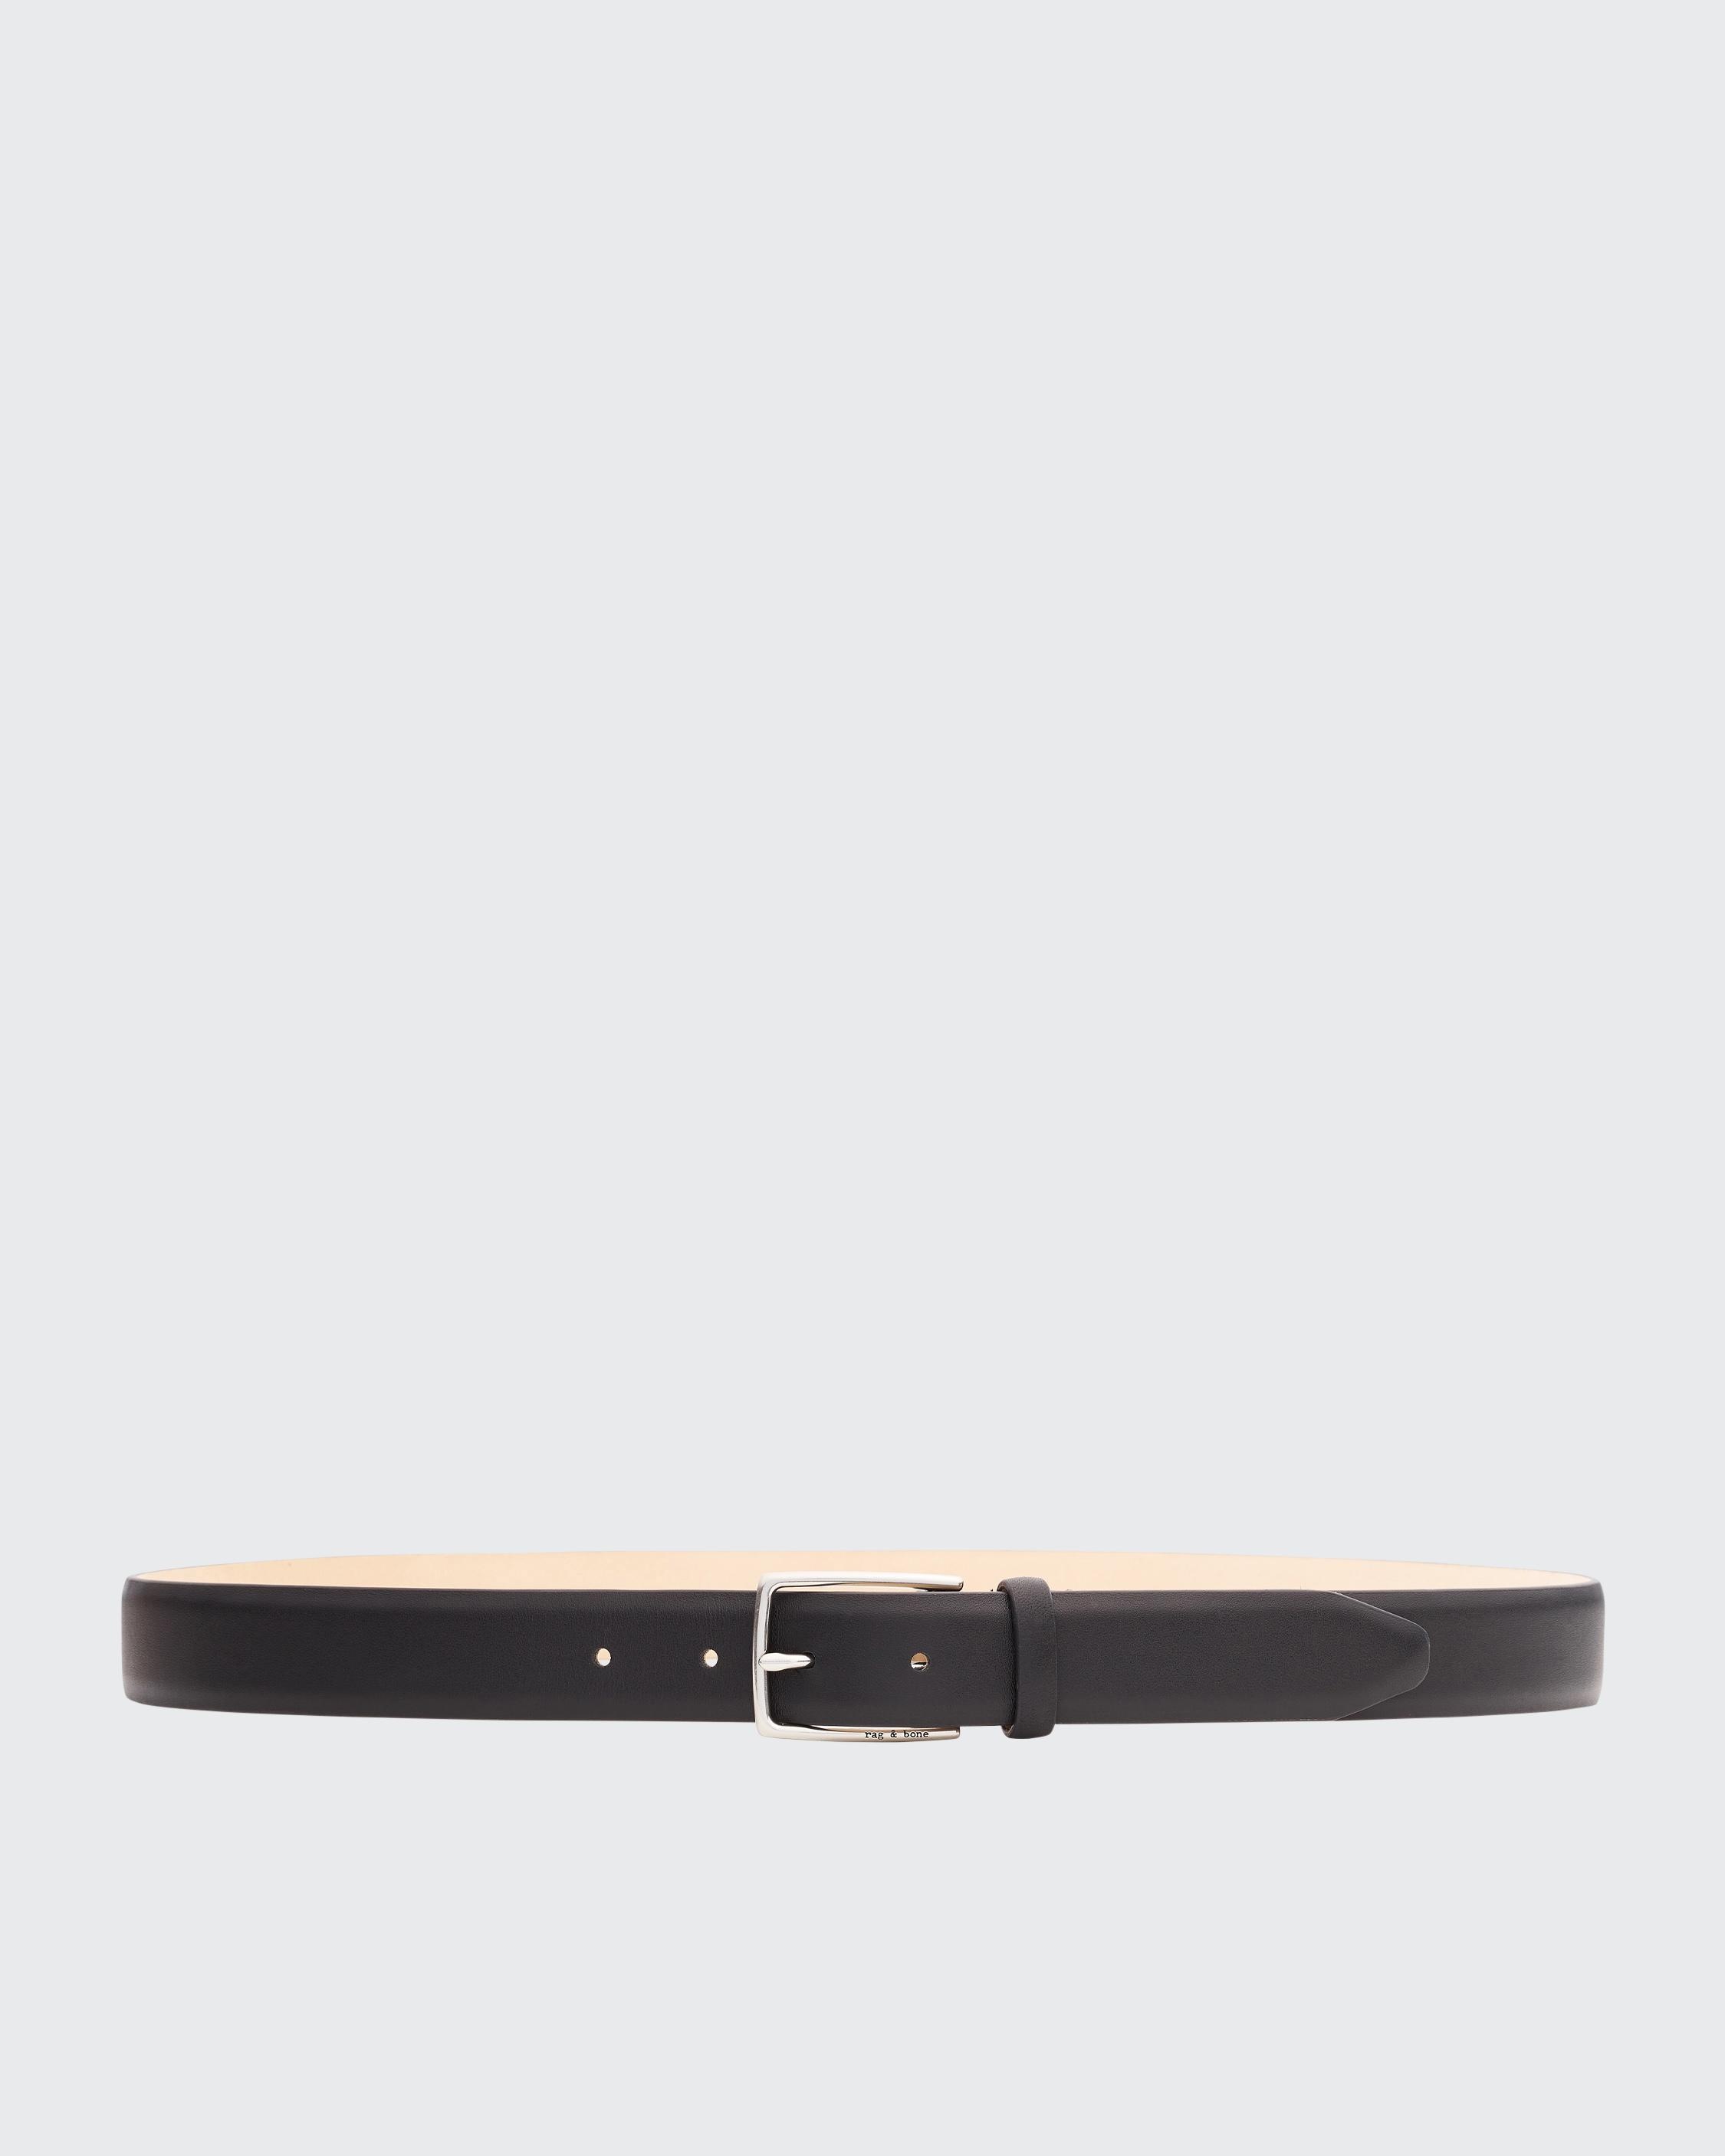 Dress Belt
Leather Belt - 1